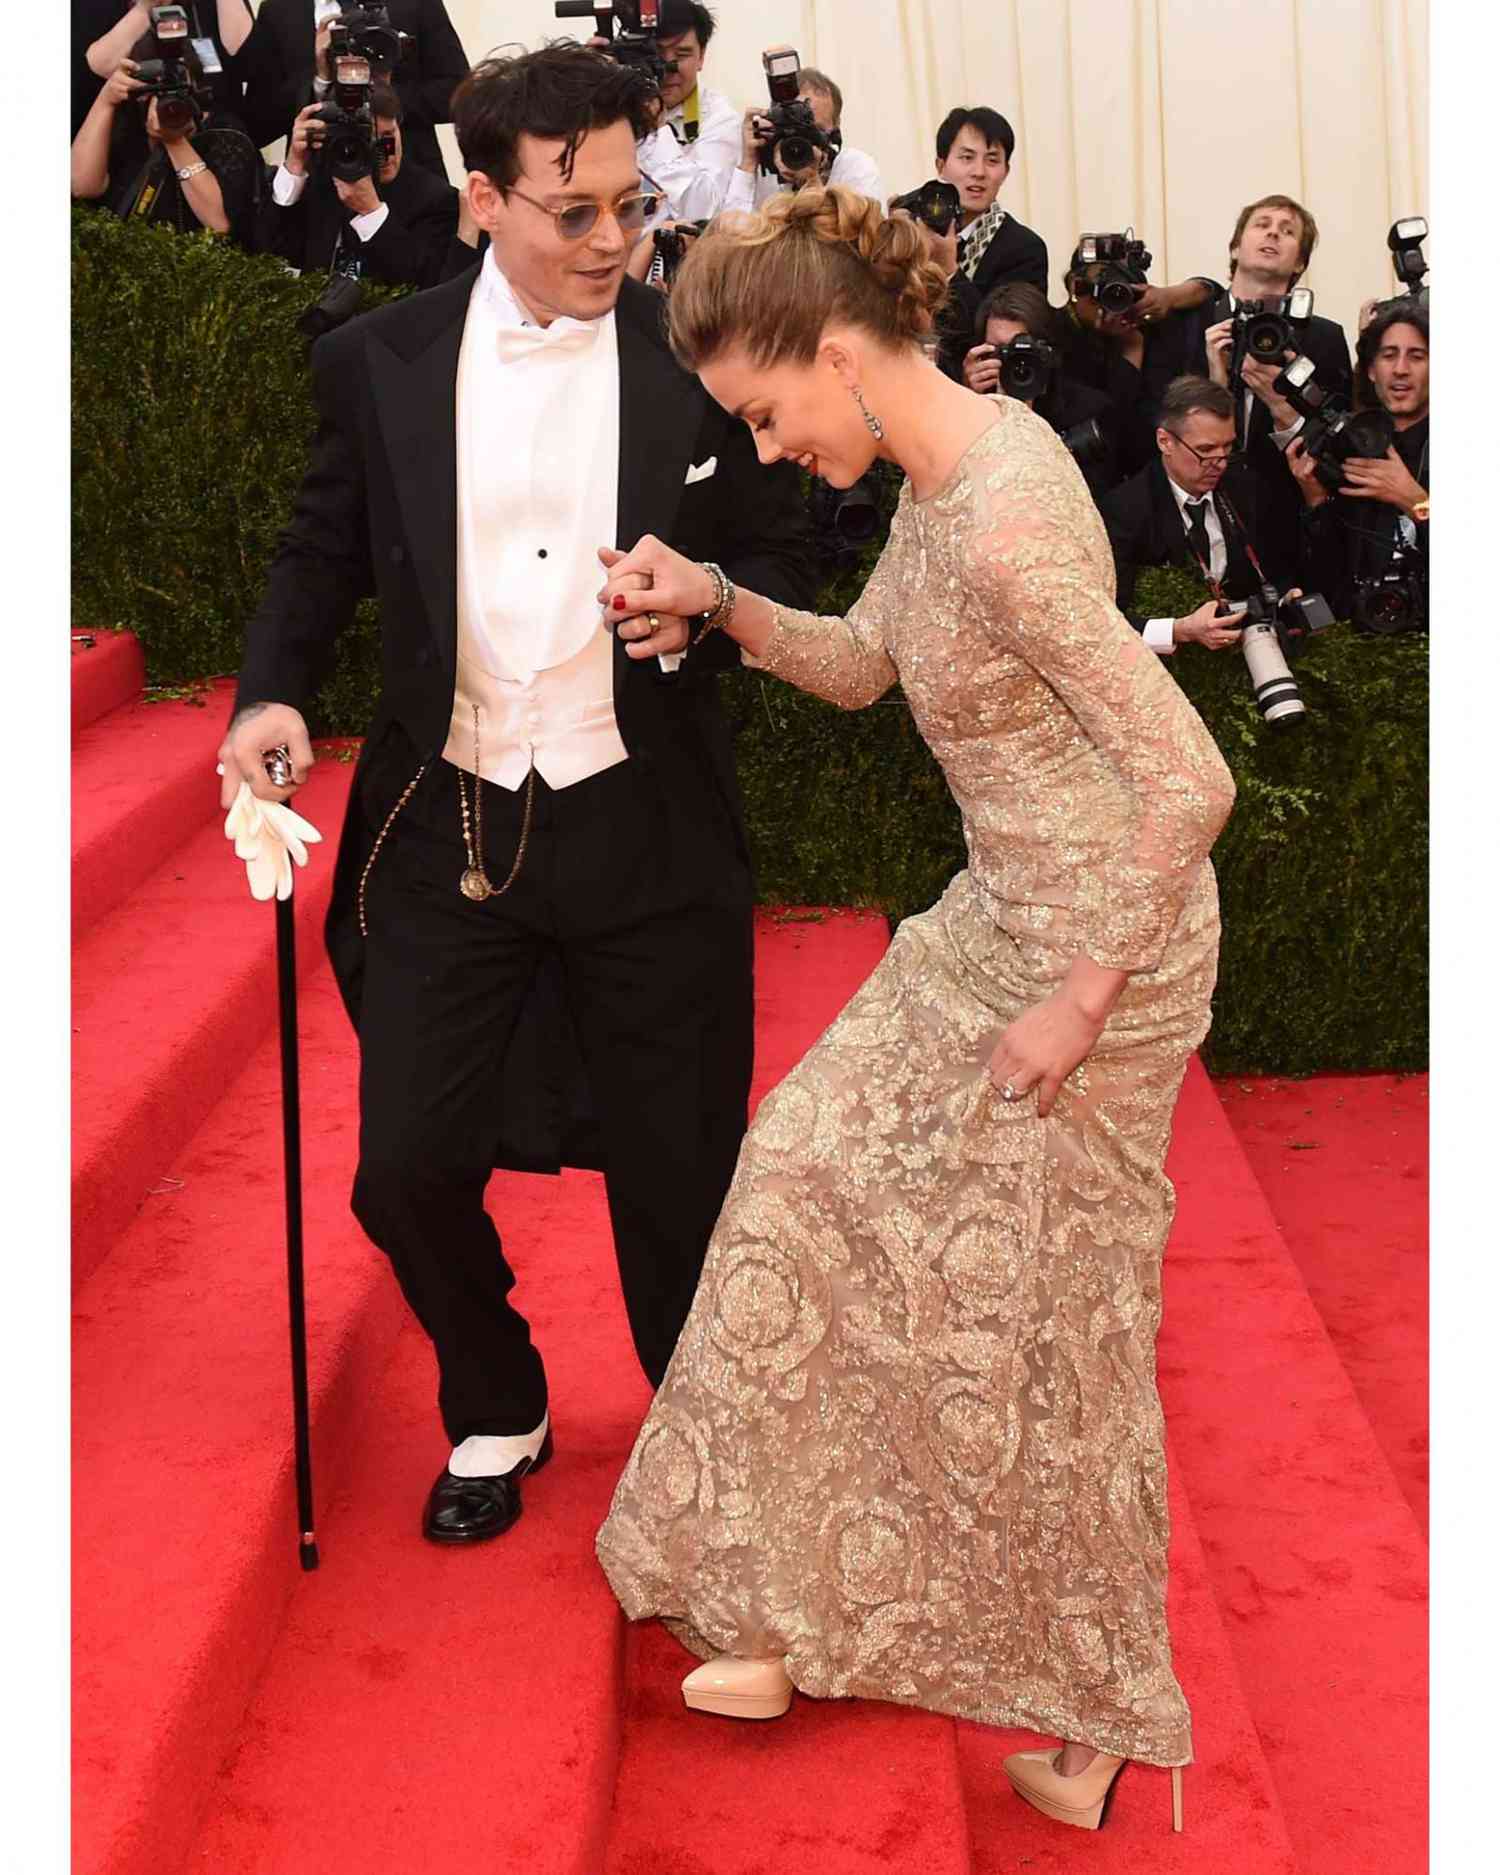 celebrity-couple-johnny-depp-amber-heard-met-gala-2014-walking-up-steps-red-carpet-0216.jpg